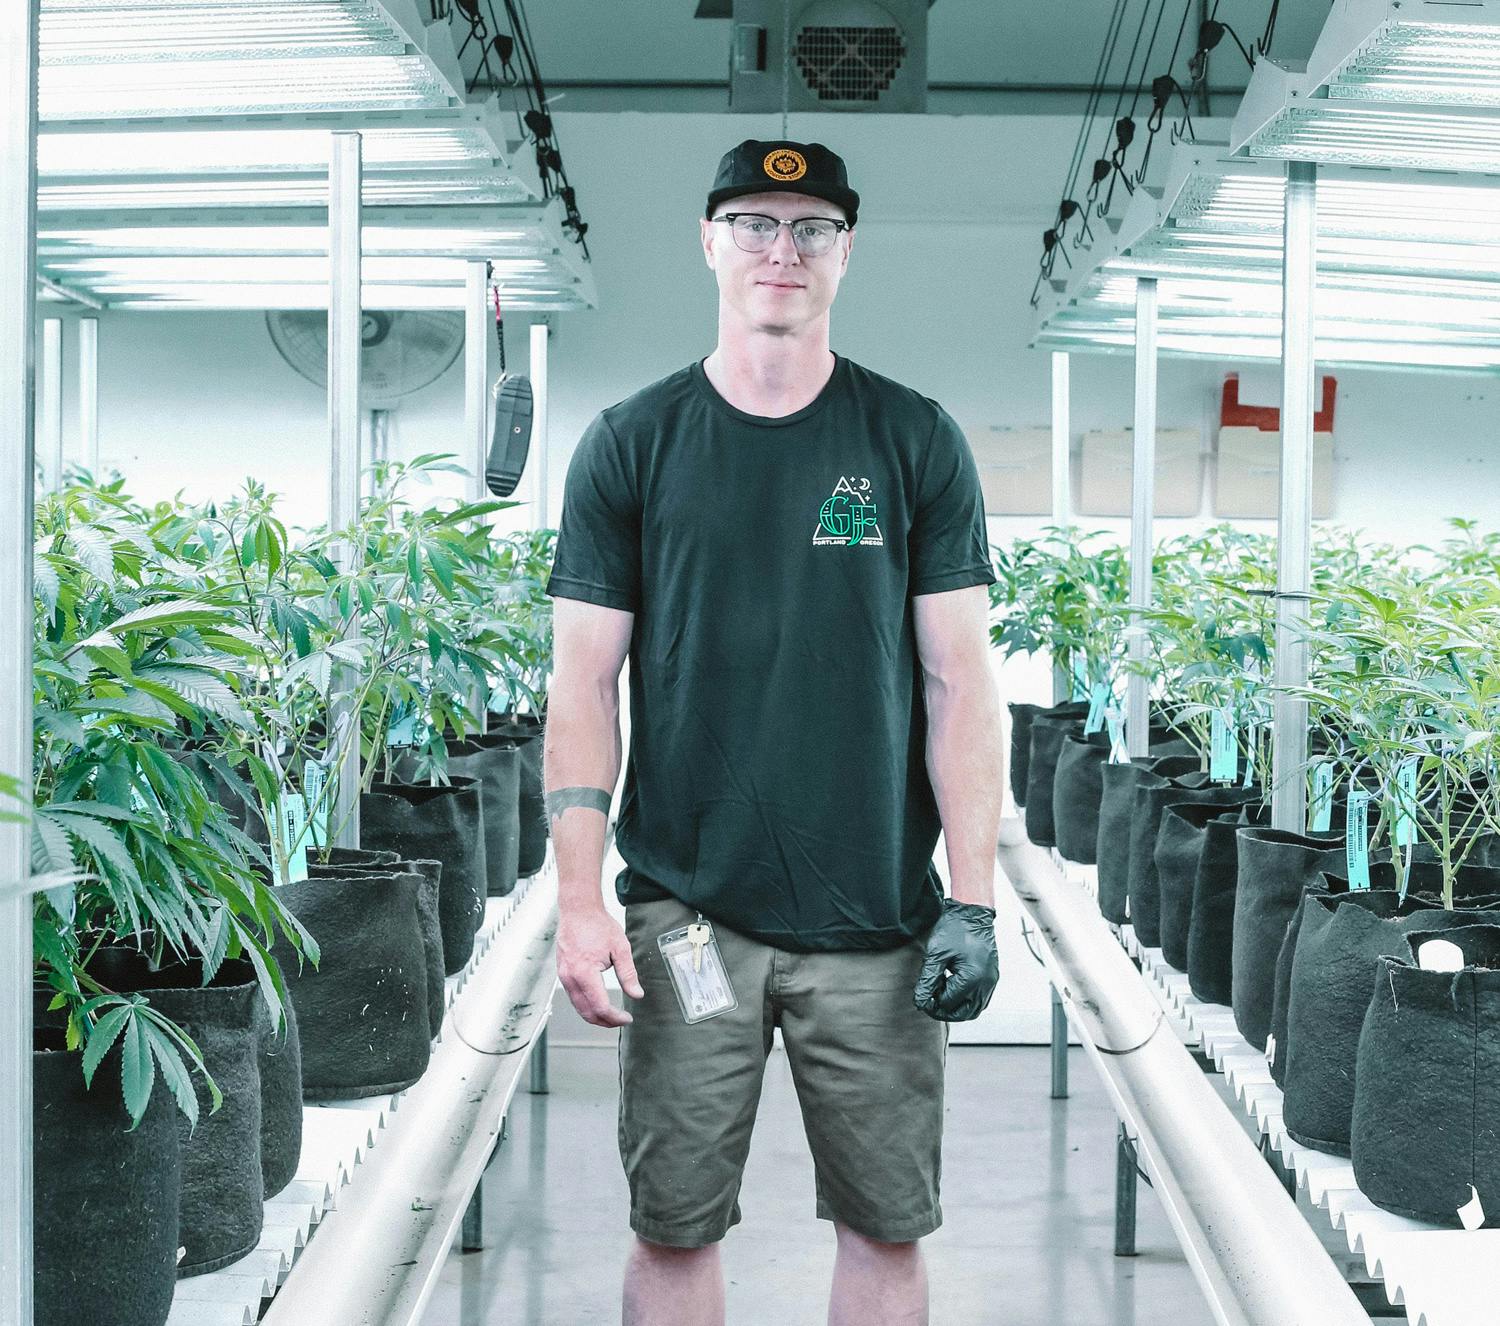 Man standing next to cannabis plants, by Greenforce Staffing via Unsplash